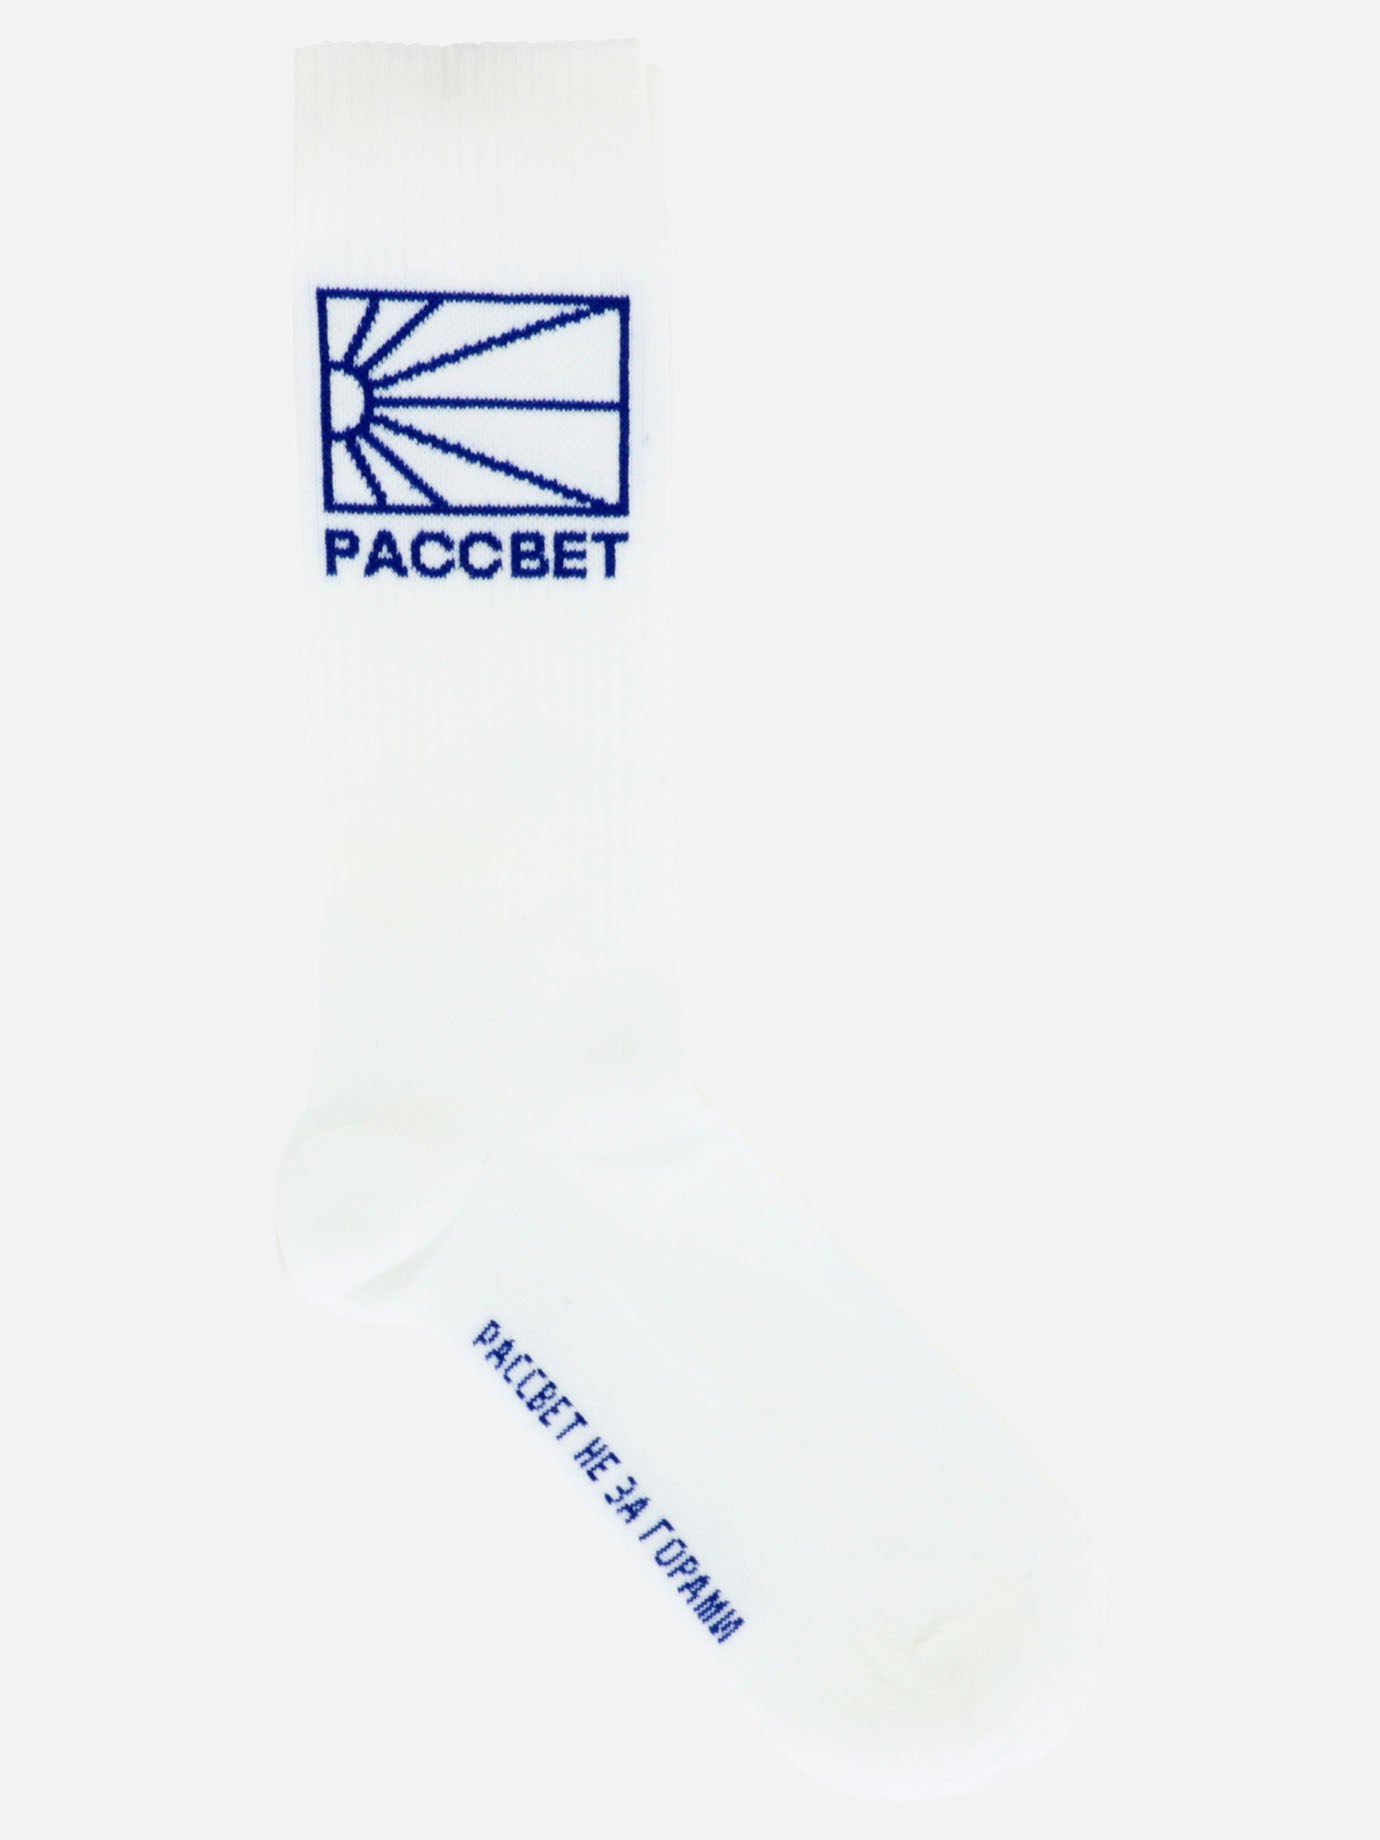  Logo 1  socksby Paccbet - 2